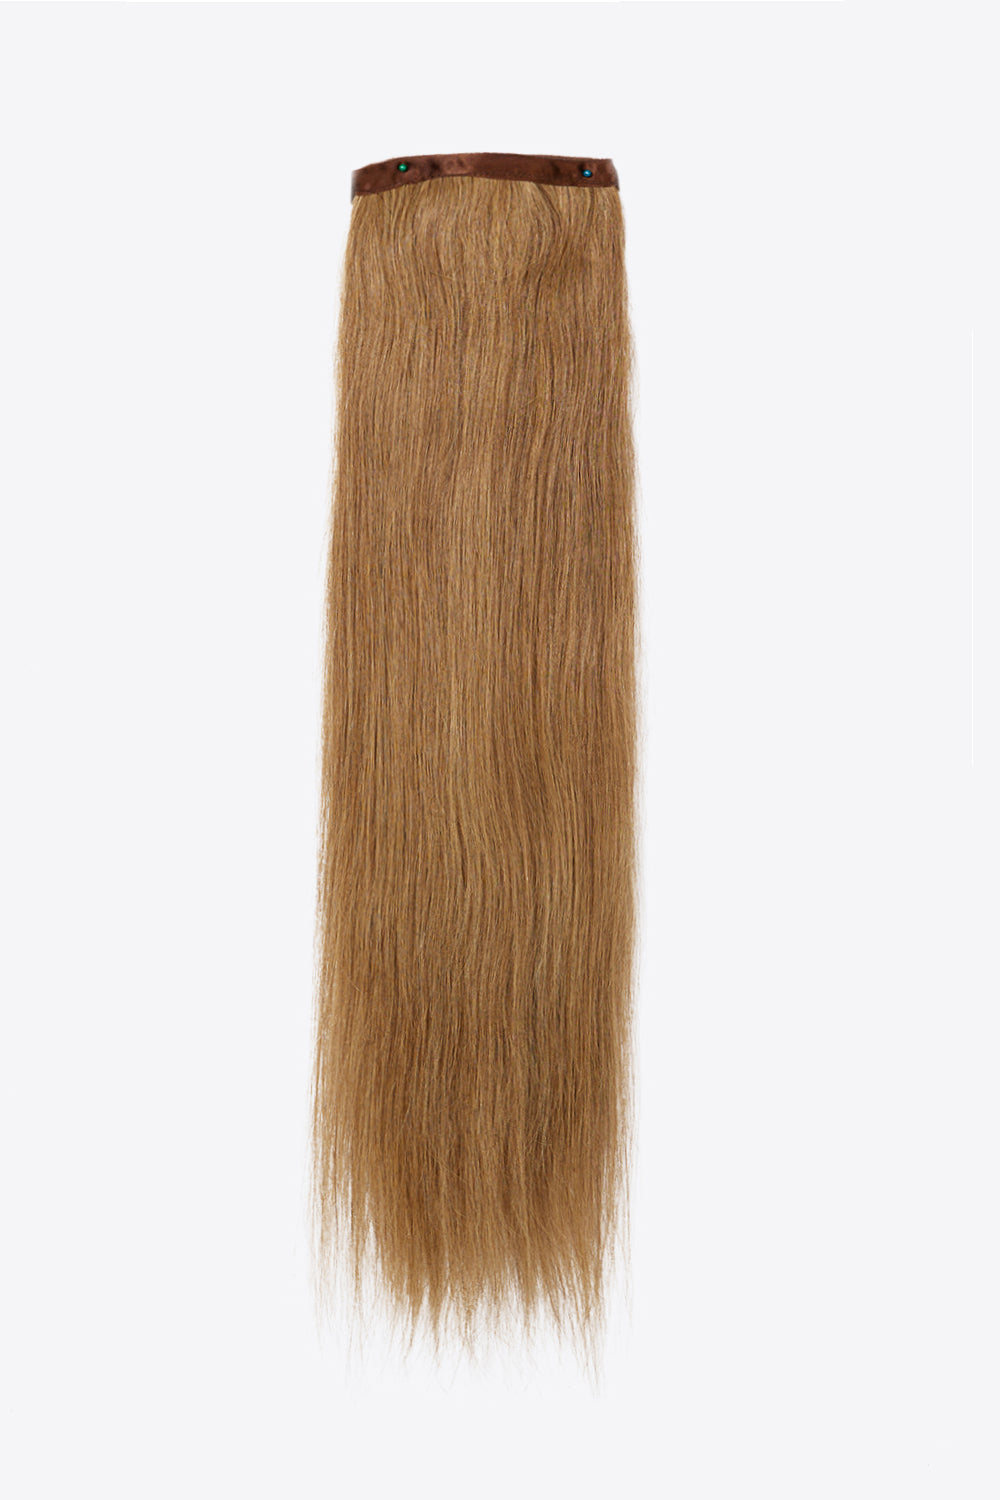 Ponytail Long Lasting Human Hair